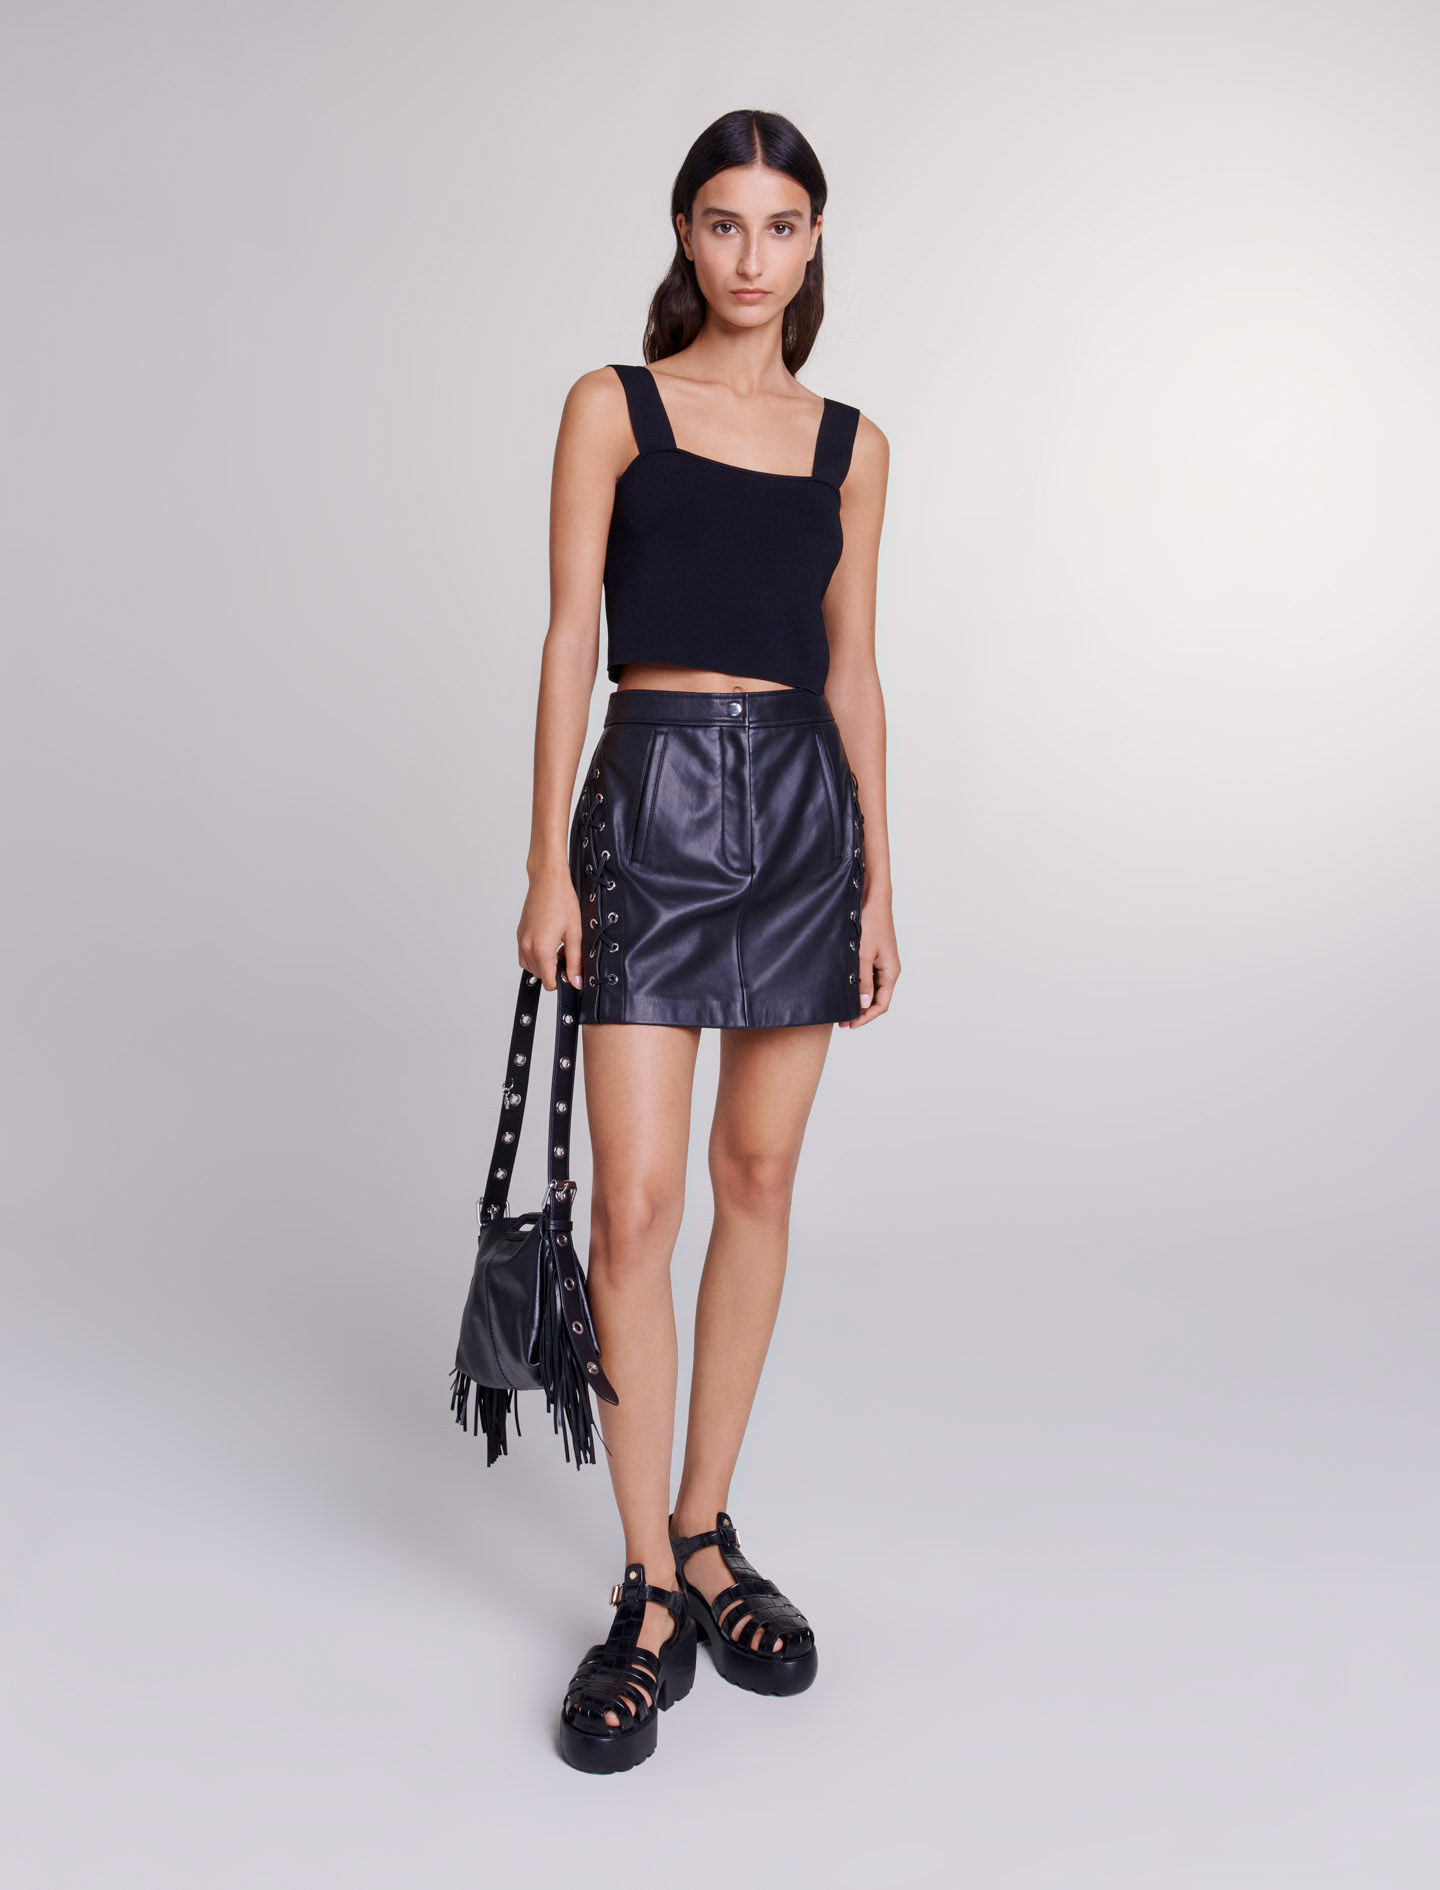 Maje Woman's polyester Yoke: Short leather skirt for Spring/Summer, in color Black / Black